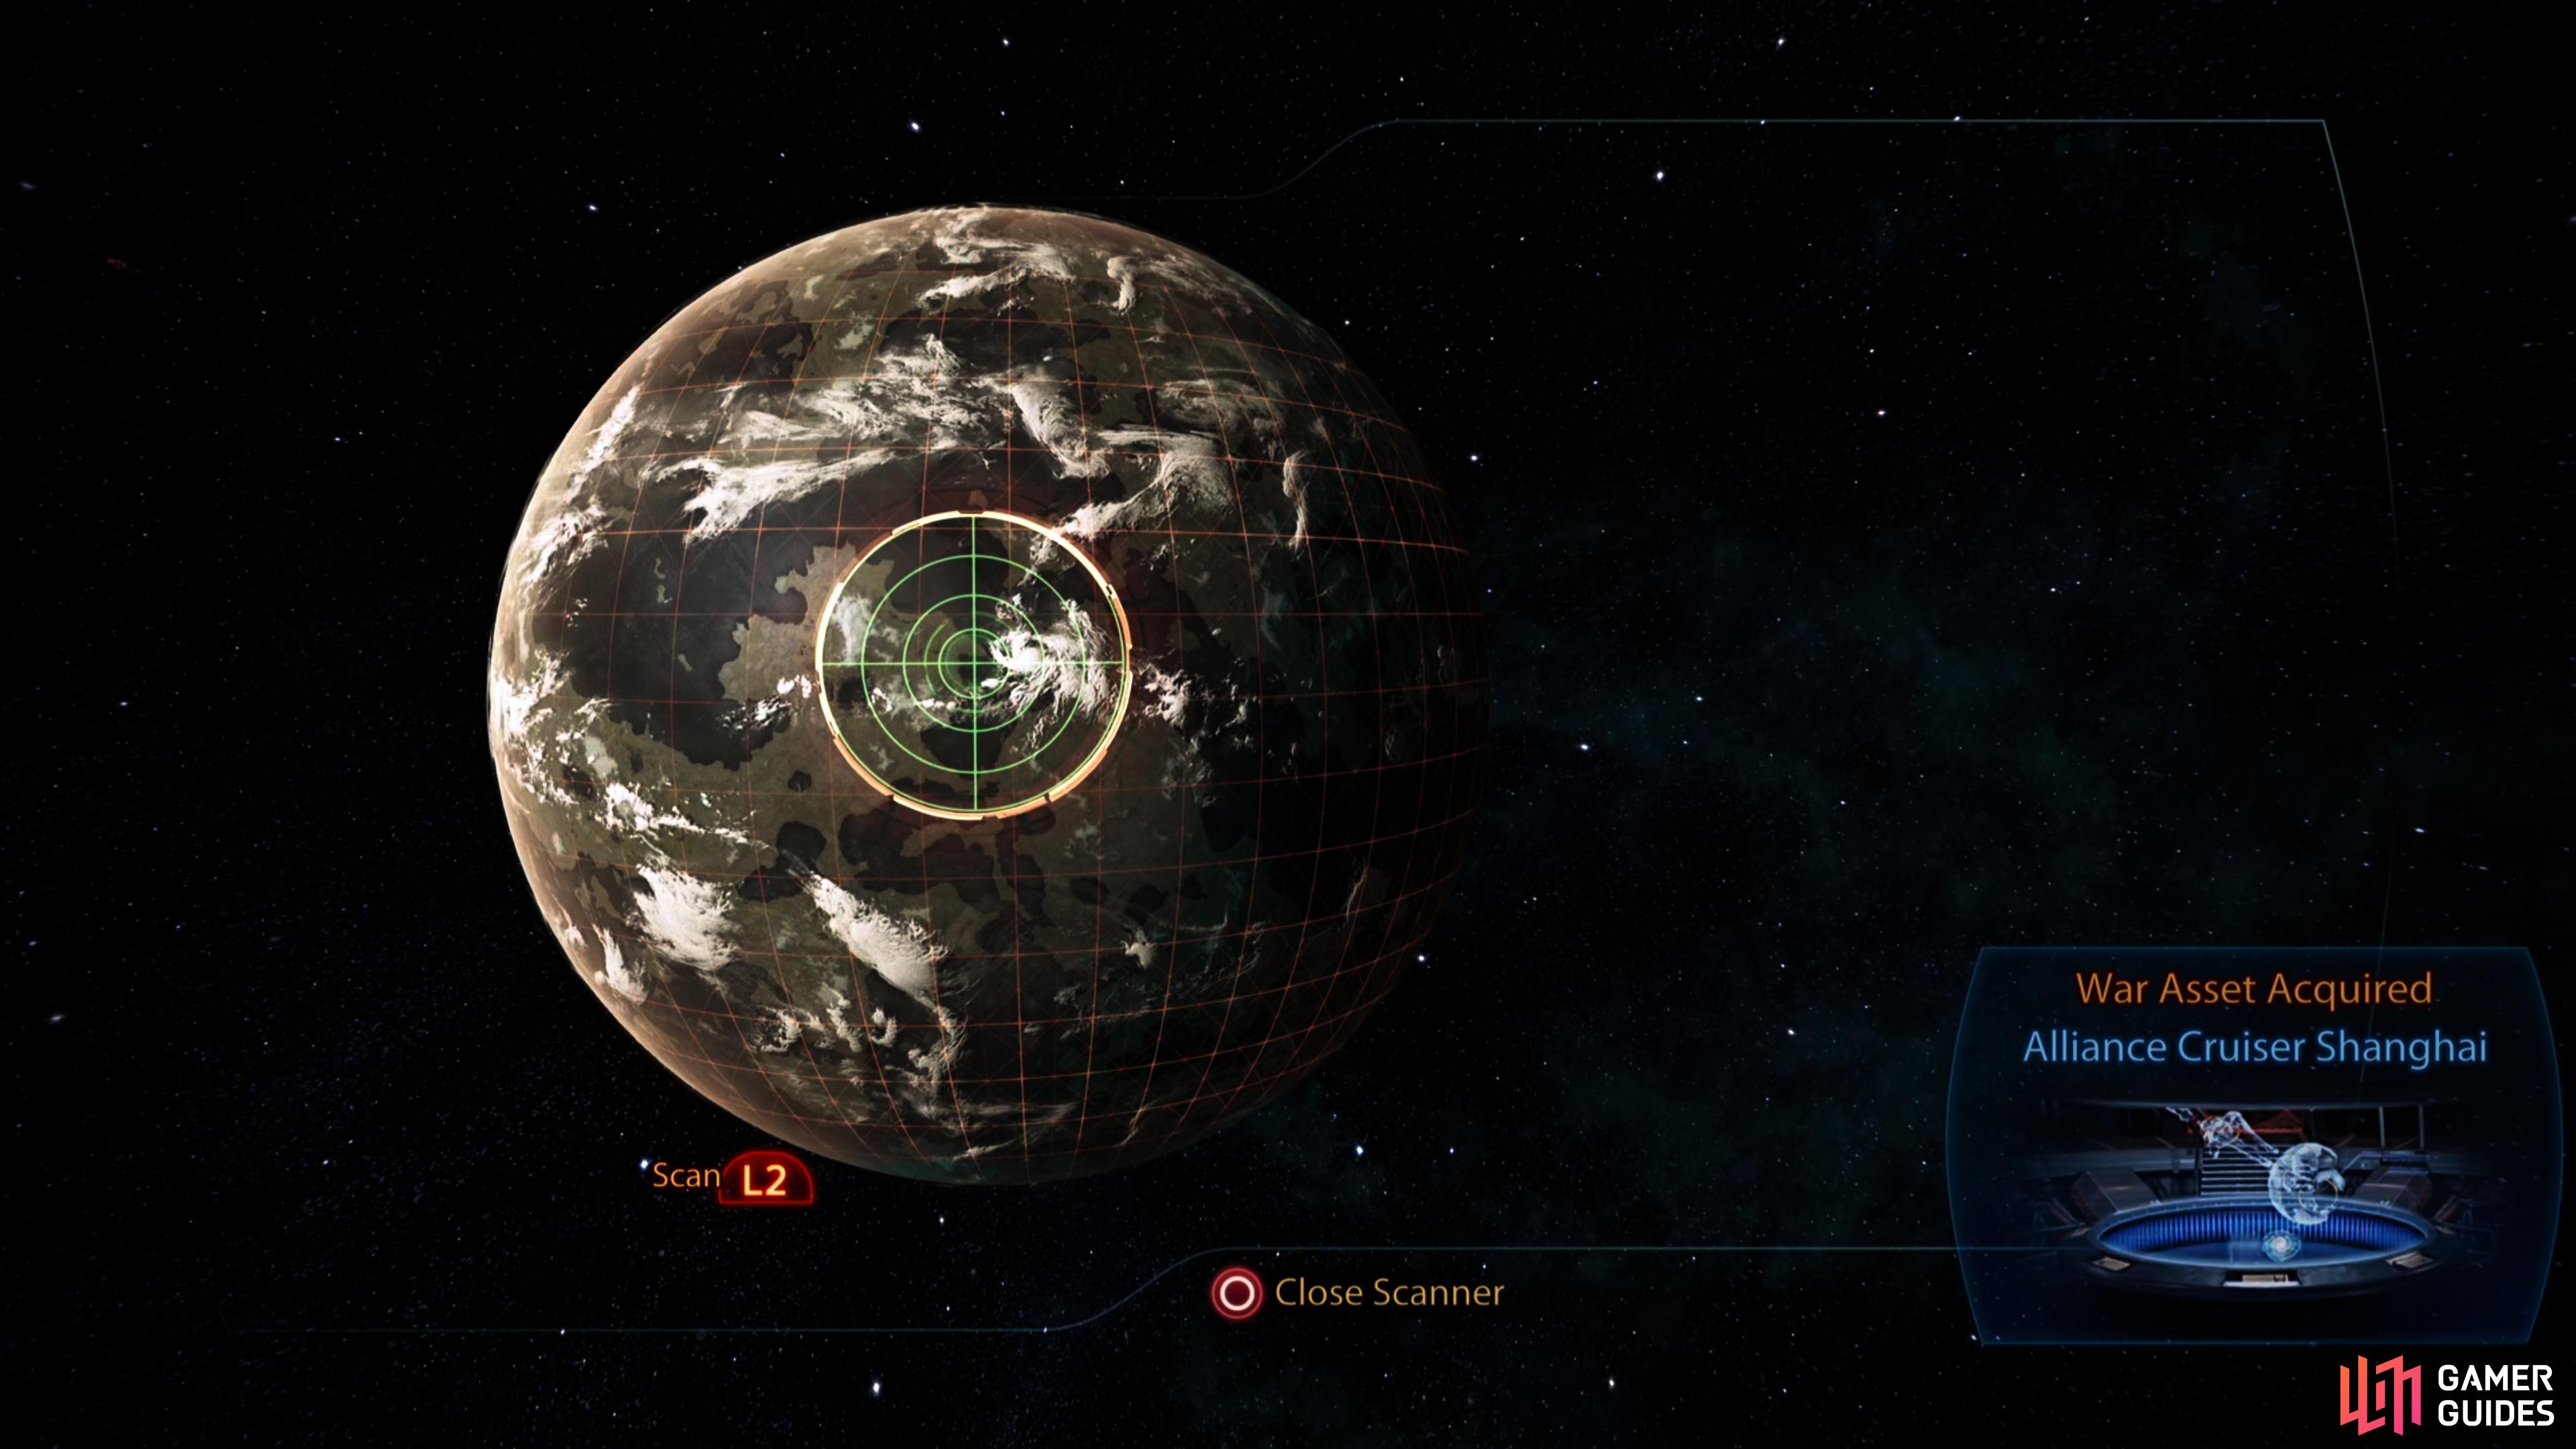 The Alliance Cruiser Shanghai can be found by scanning Terra Nova.